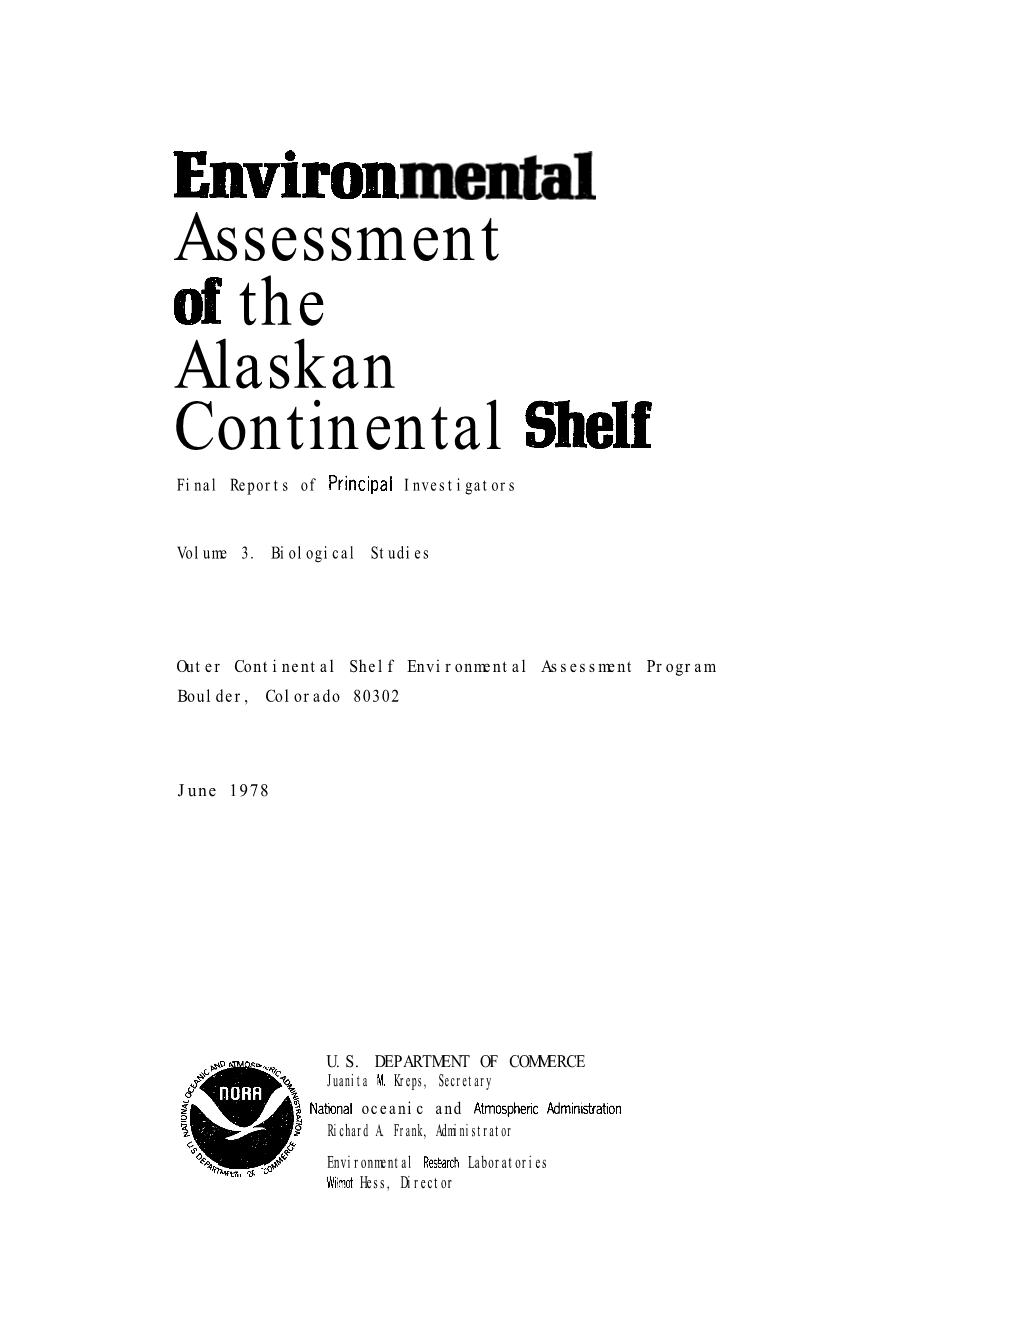 Assessment of the Alaskan Continental Shelf Final Reports of Prmclpal Investigators